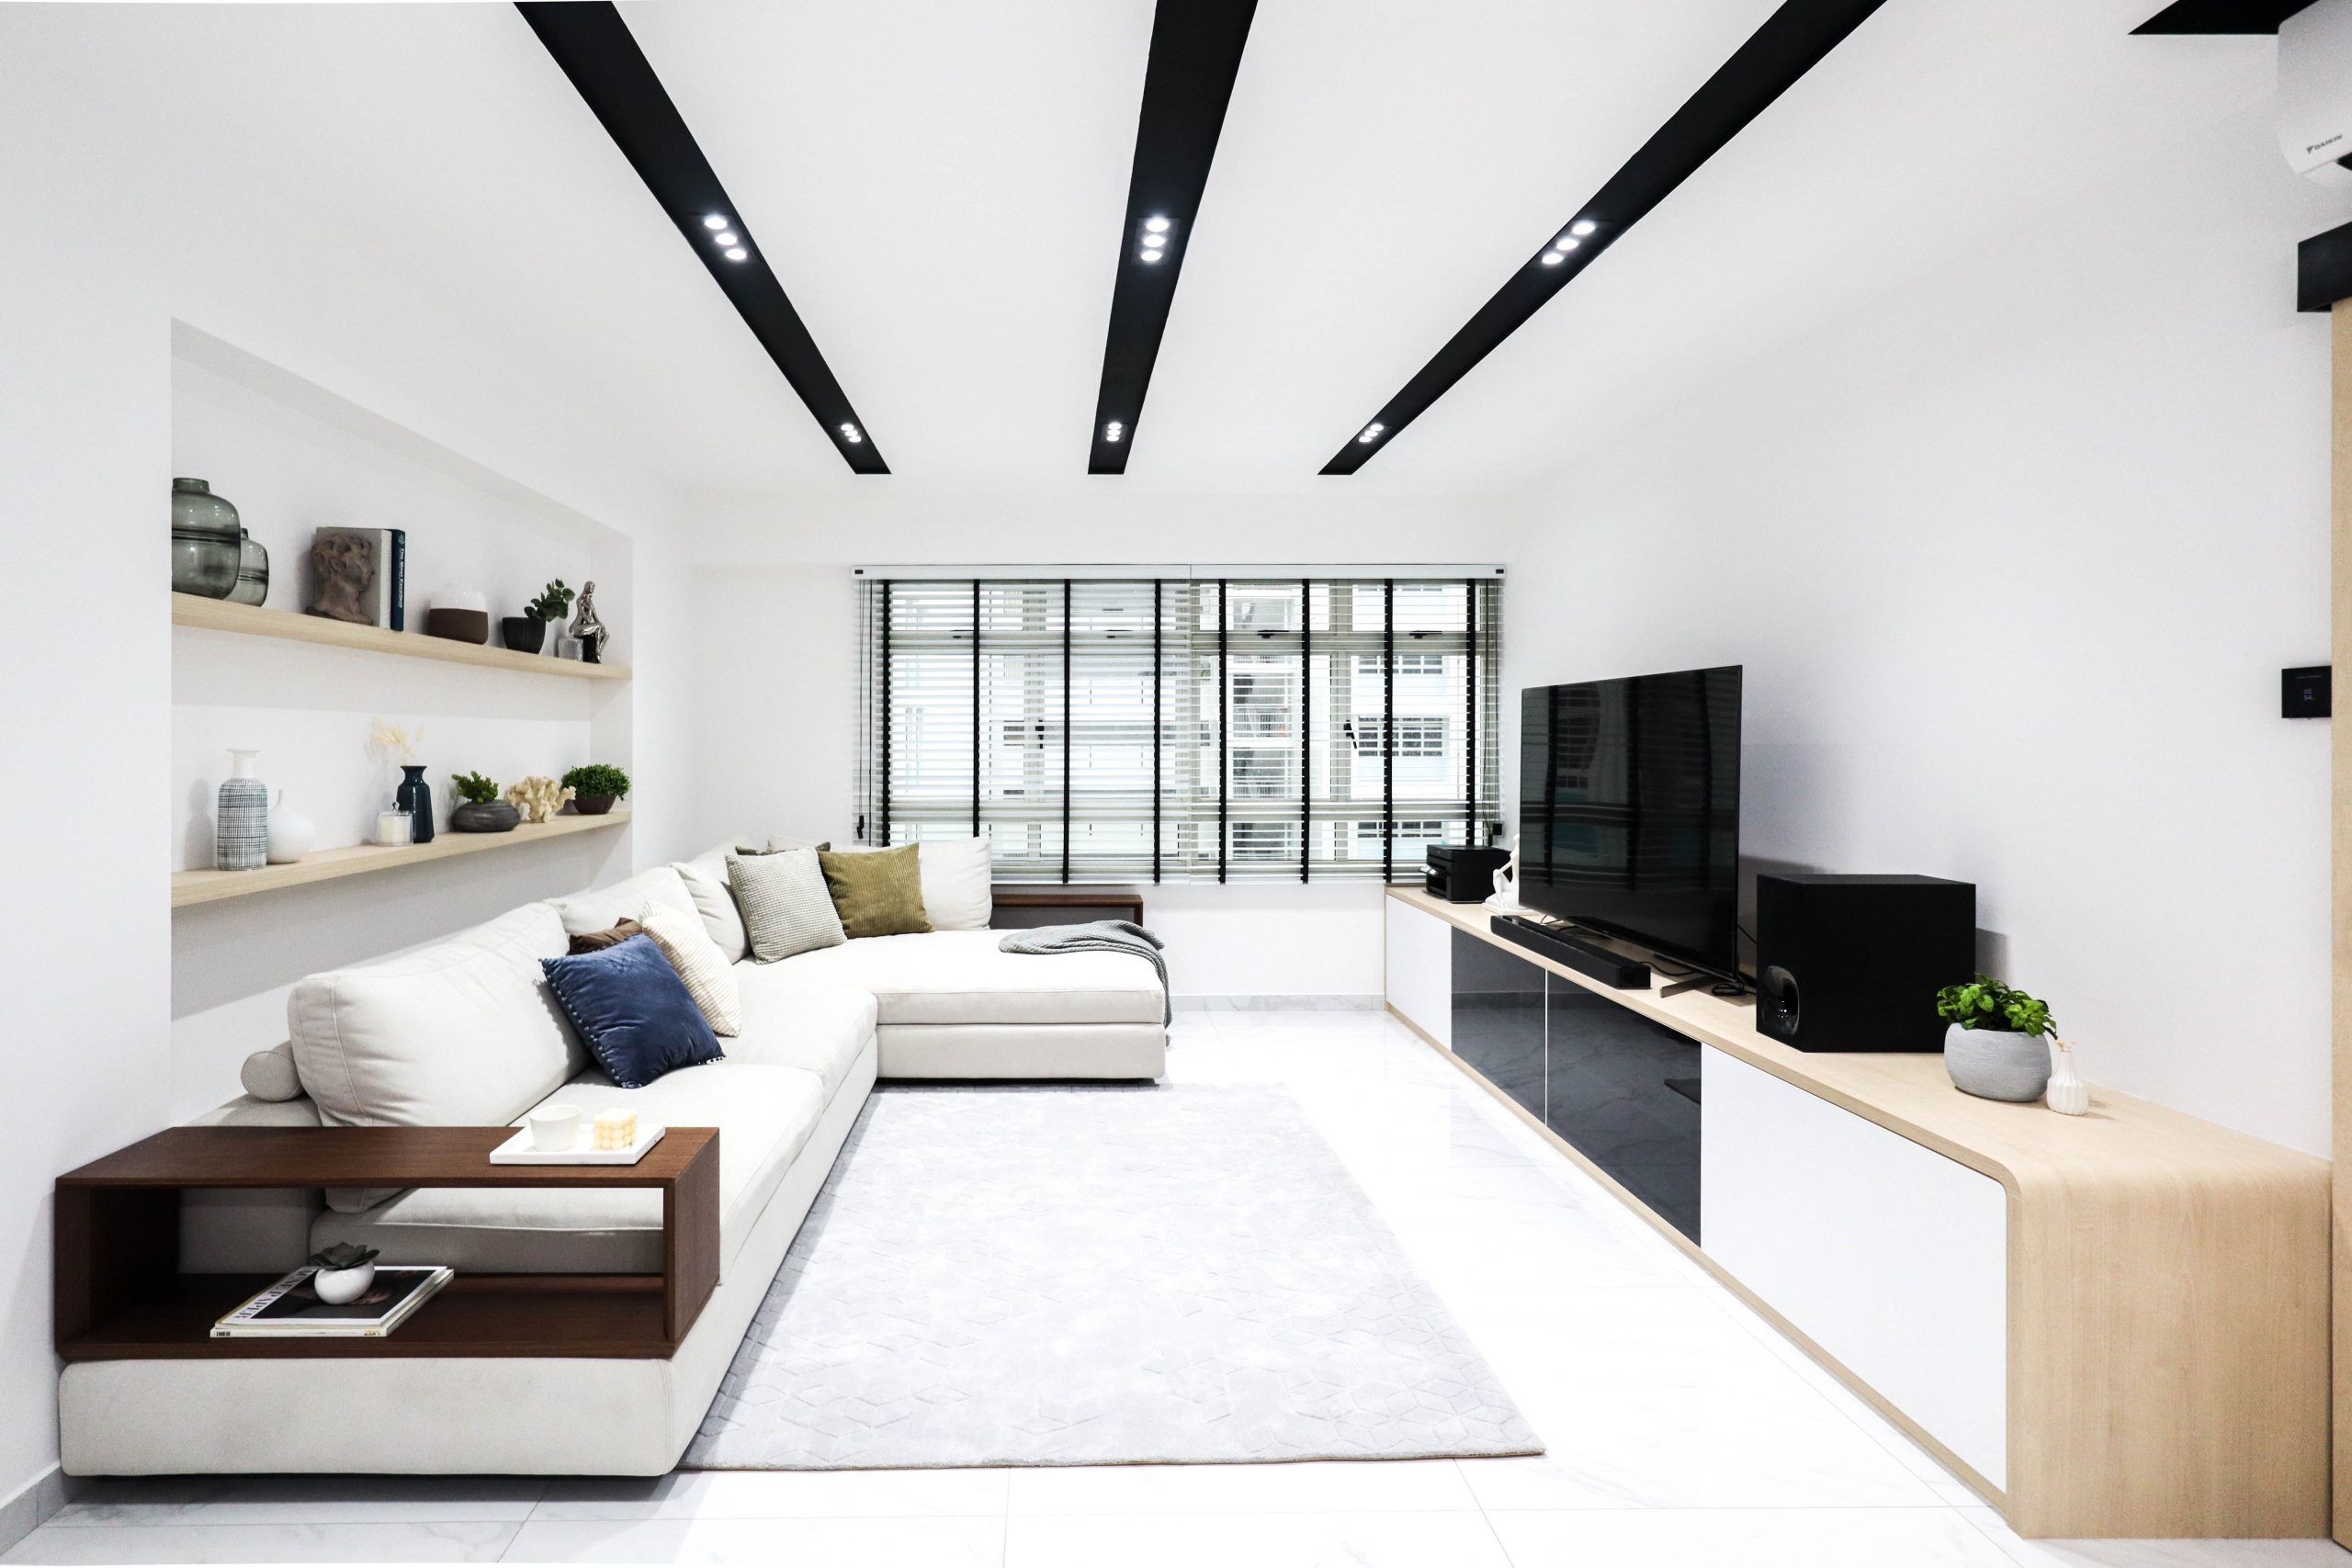 HDB Resale Sleek Minimalist Living Room Interior Design in Monochrome